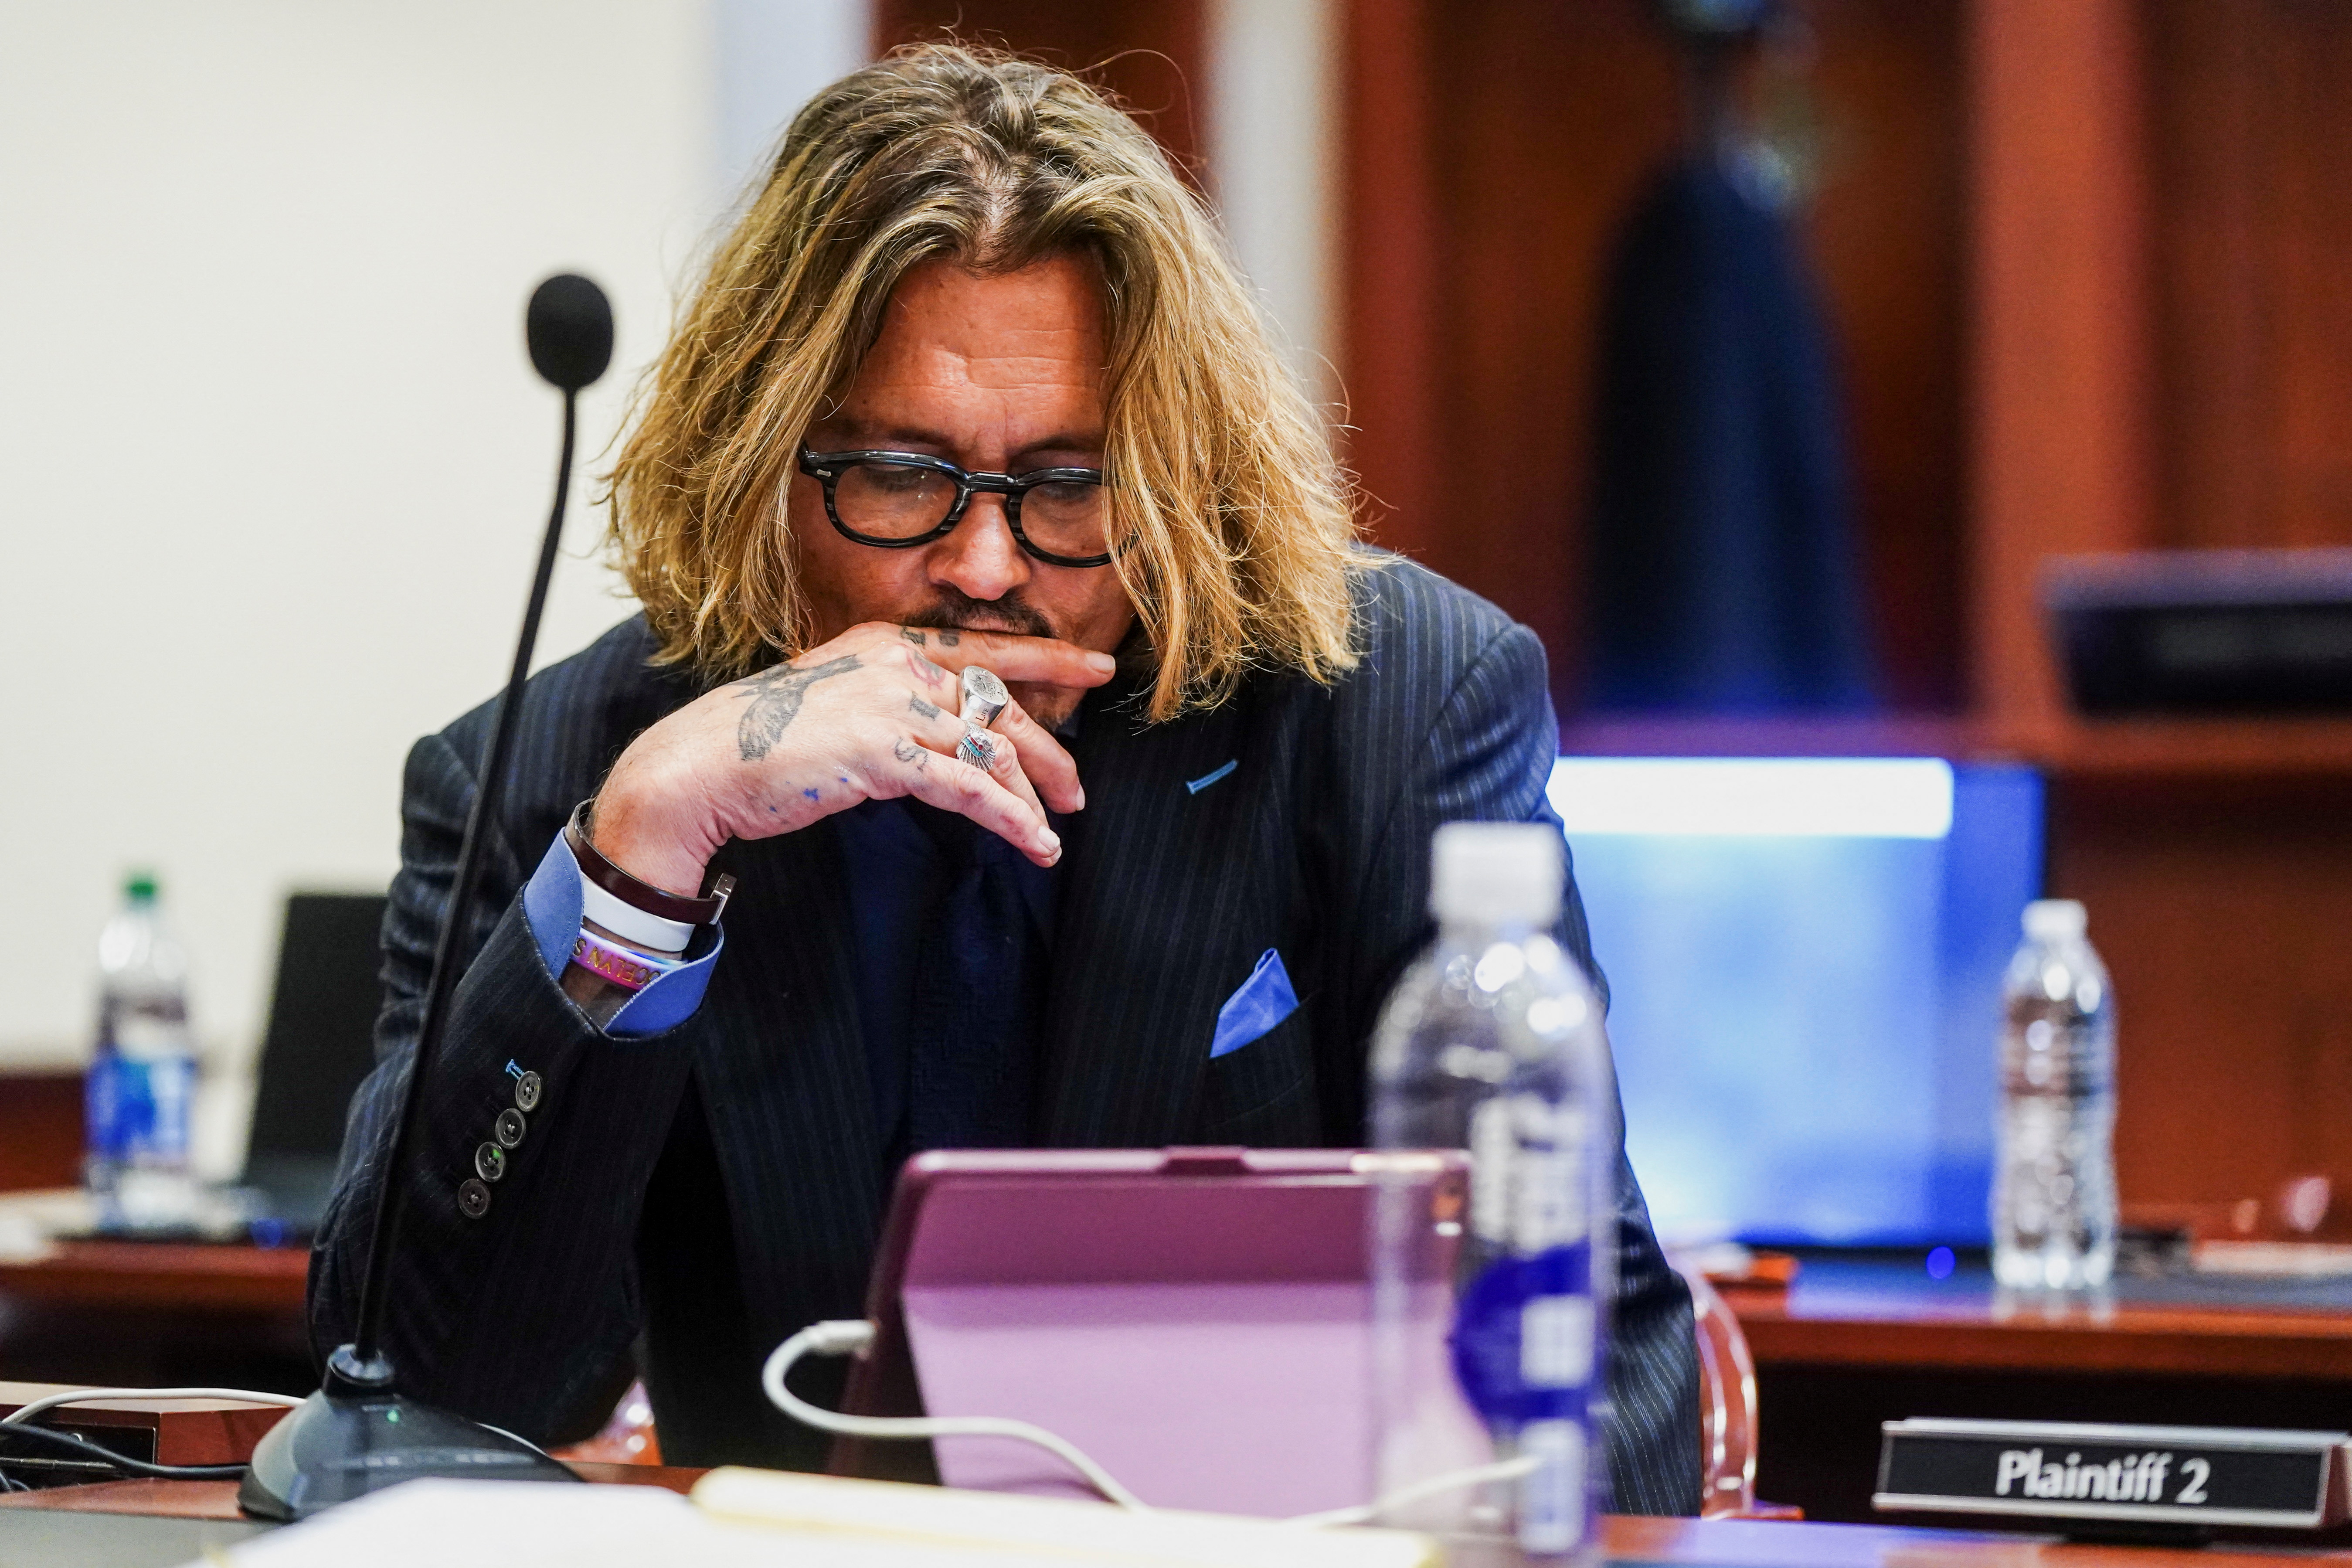 Actor Johnny Depp mantiene una disputa legal contra Amber Heard (Foto: Shawn Thew/Pool via REUTERS)